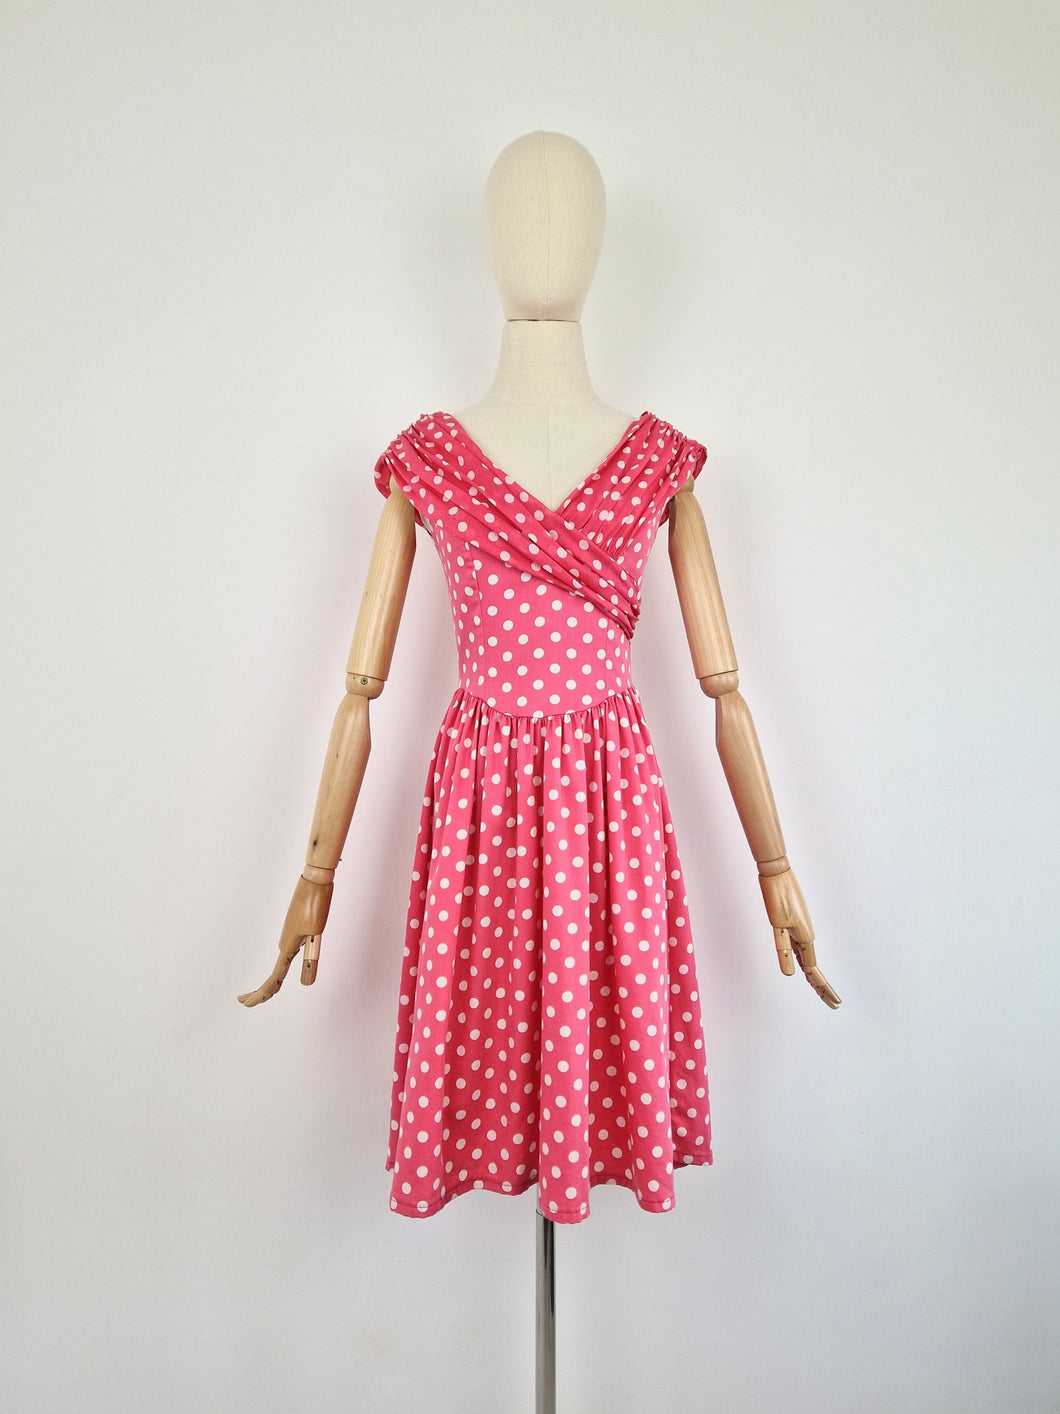 Vintage Laura Ashley polka dot dress